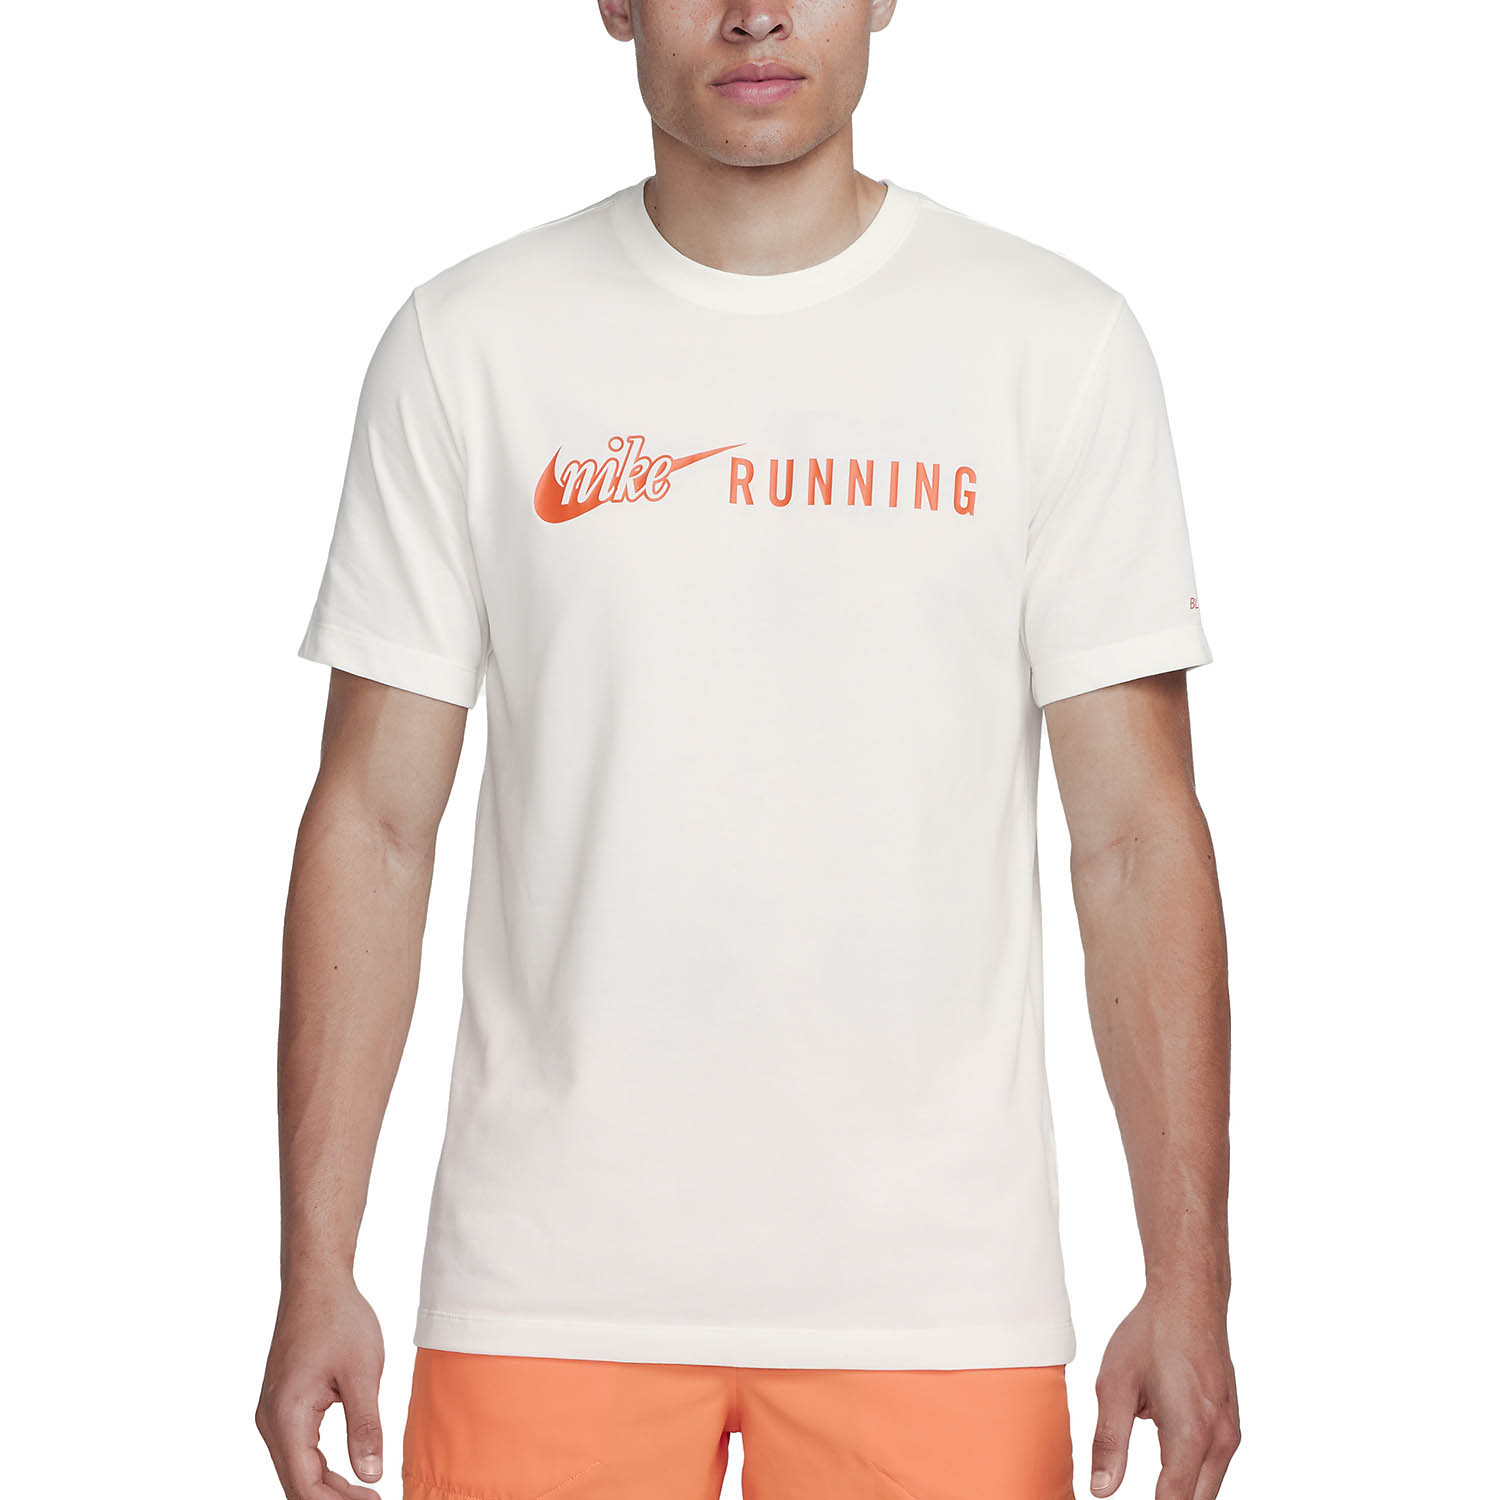 Nike Dri-FIT Energy Camiseta - Sail